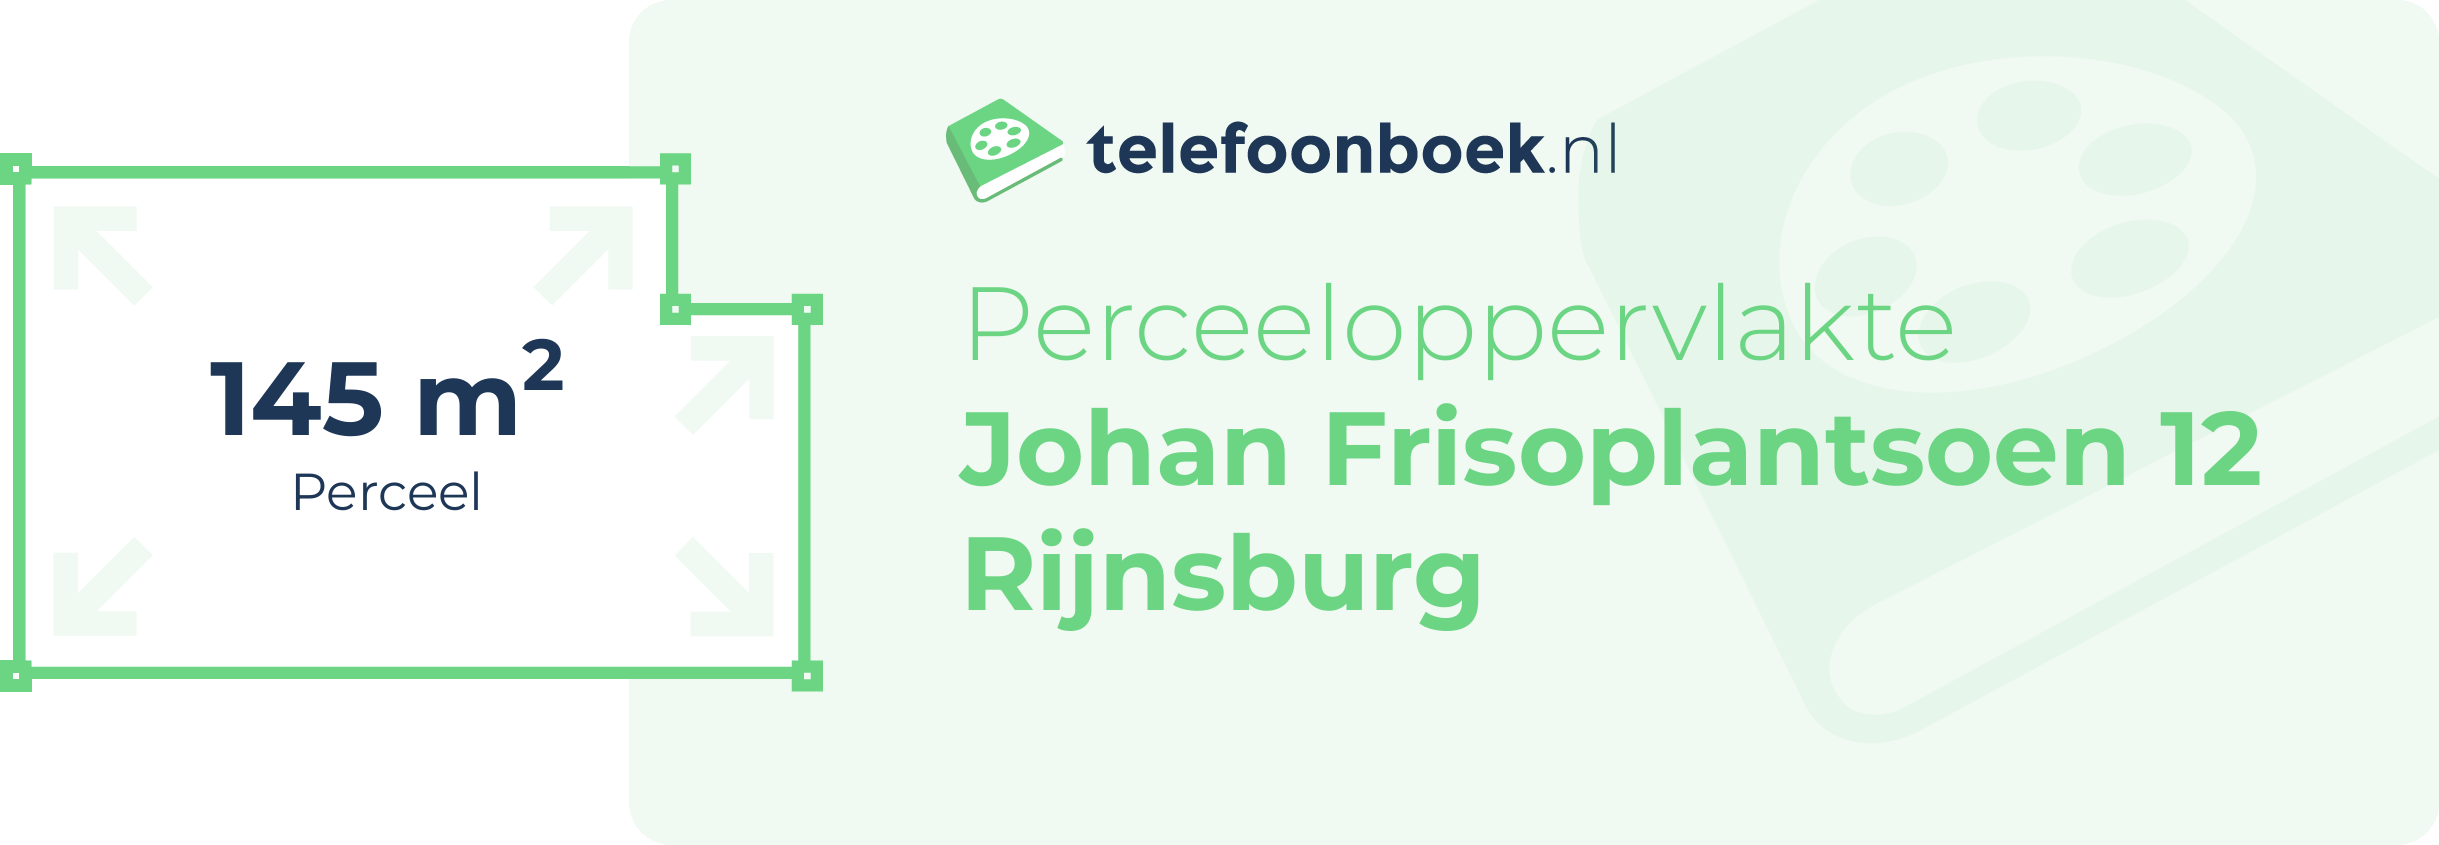 Perceeloppervlakte Johan Frisoplantsoen 12 Rijnsburg